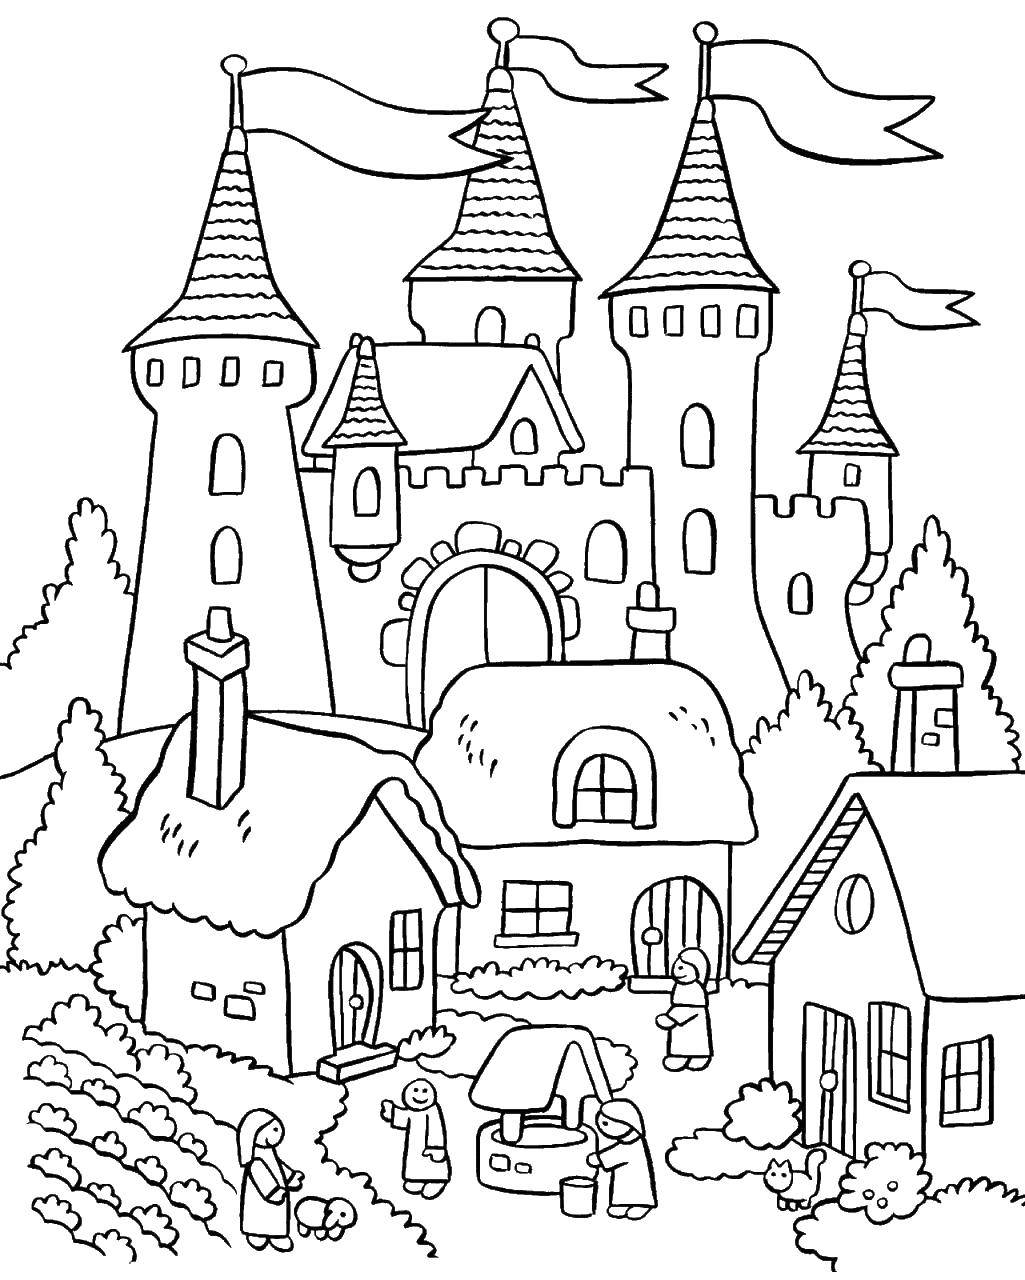 Название: Раскраска Дома и замок. Категория: Раскраски дом. Теги: дом, замок, колодец, люди.